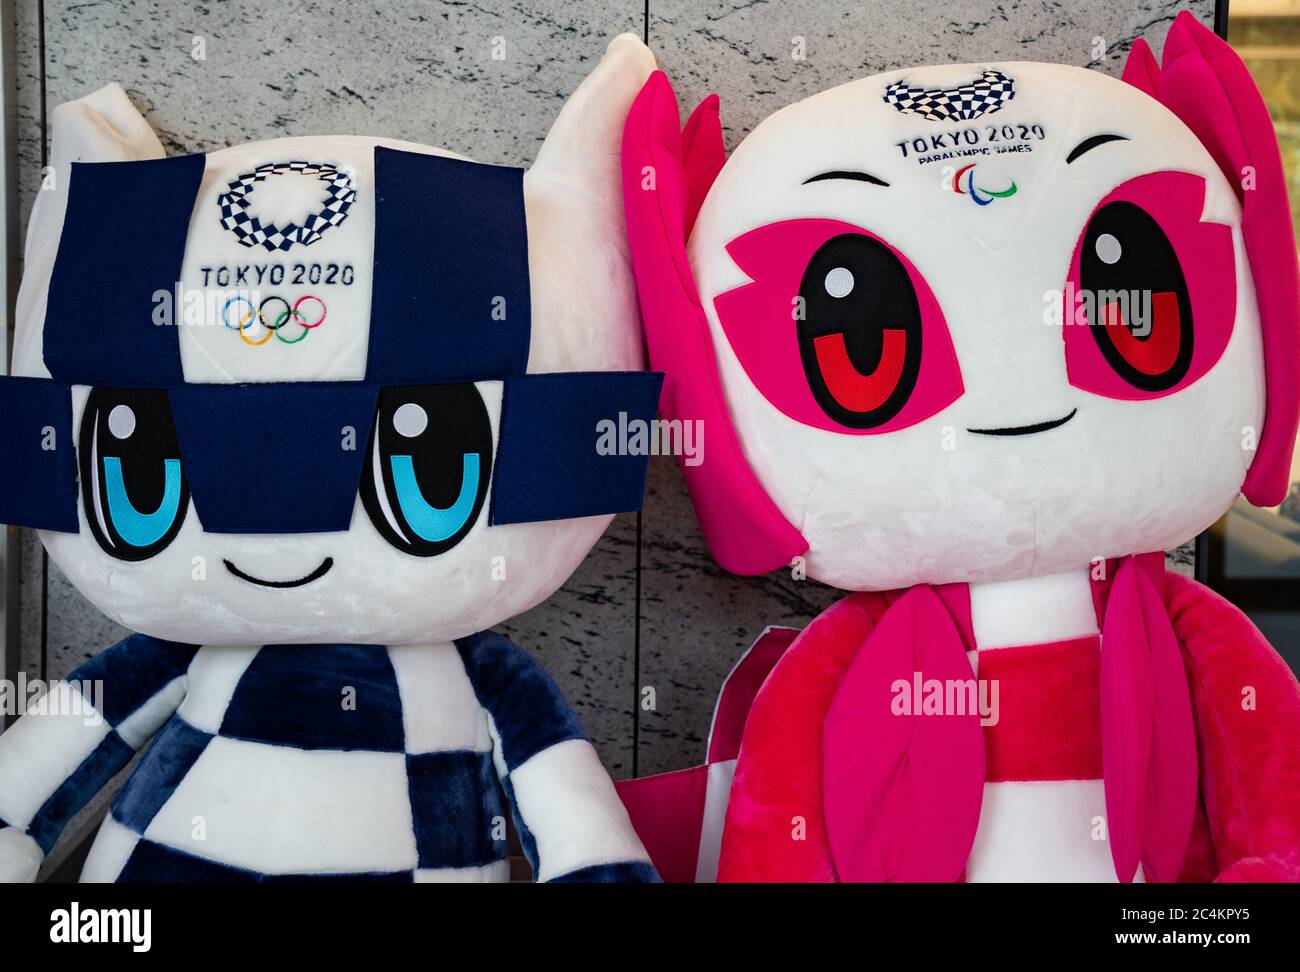 Tokyo 2020 Olympics and Paralympics Games mascot Miraitowa and Someity. Stock Photo